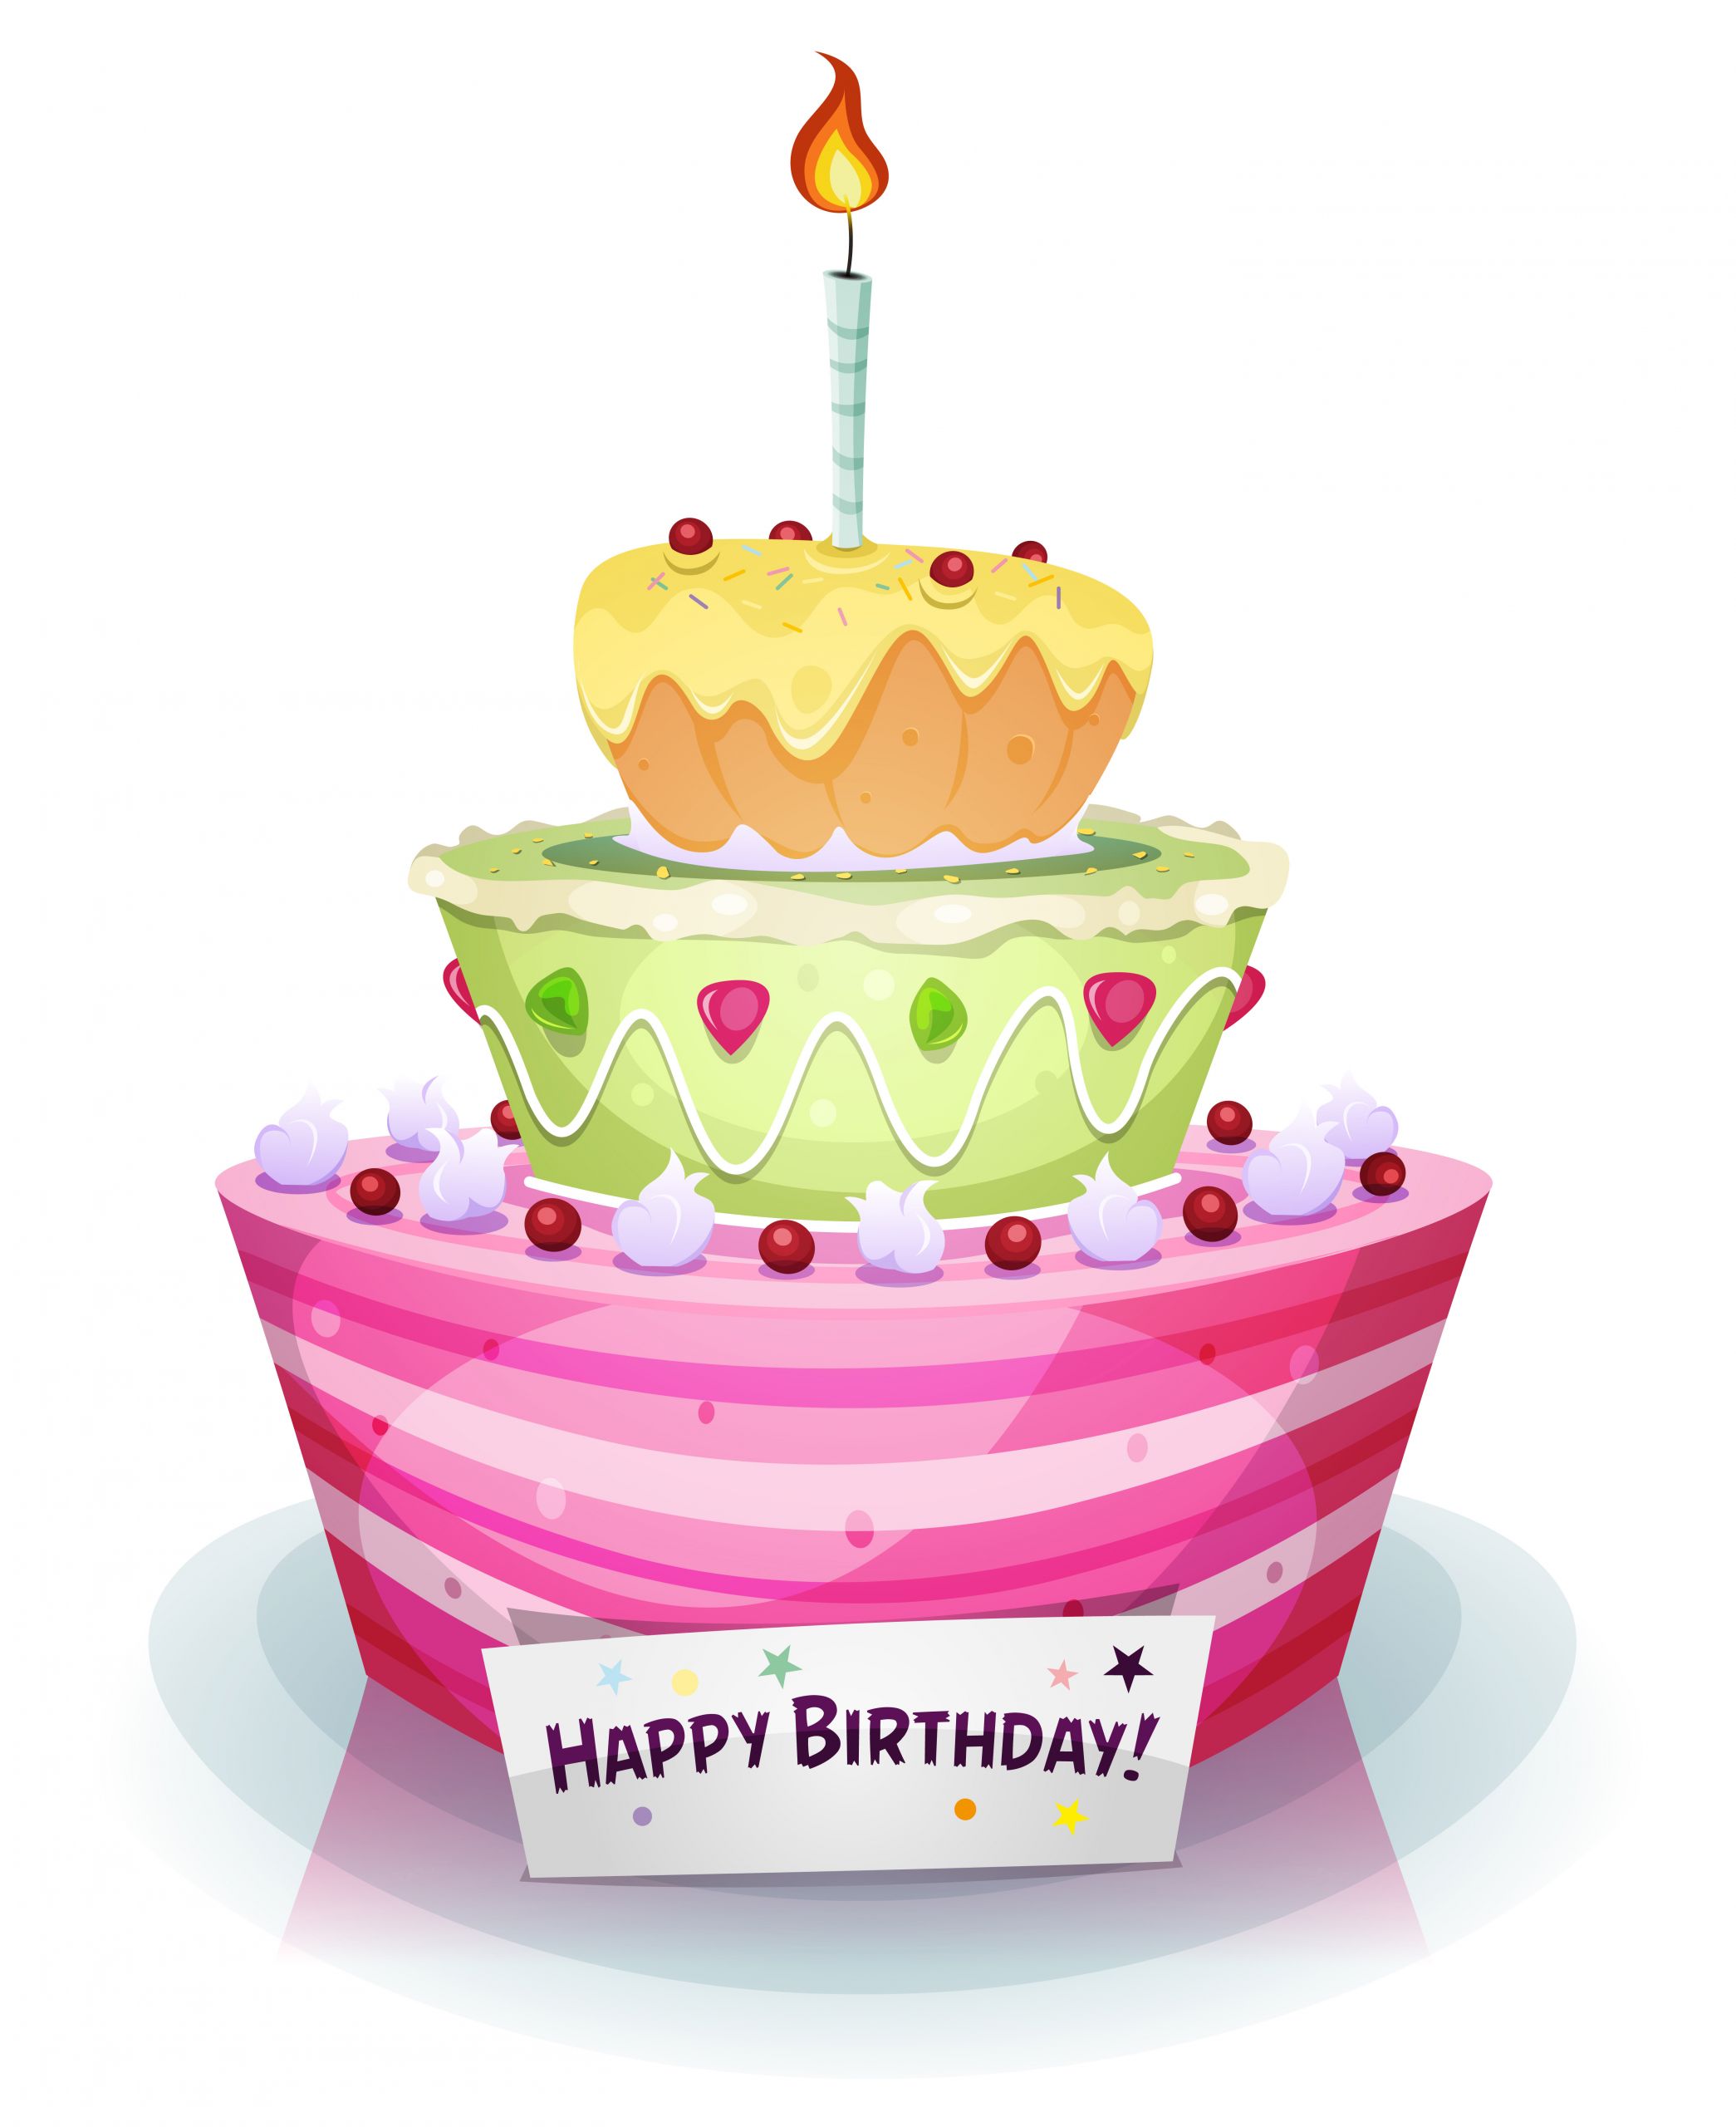 Birthday Cake Vector
 Birthday Cake Download Free Vectors Clipart Graphics